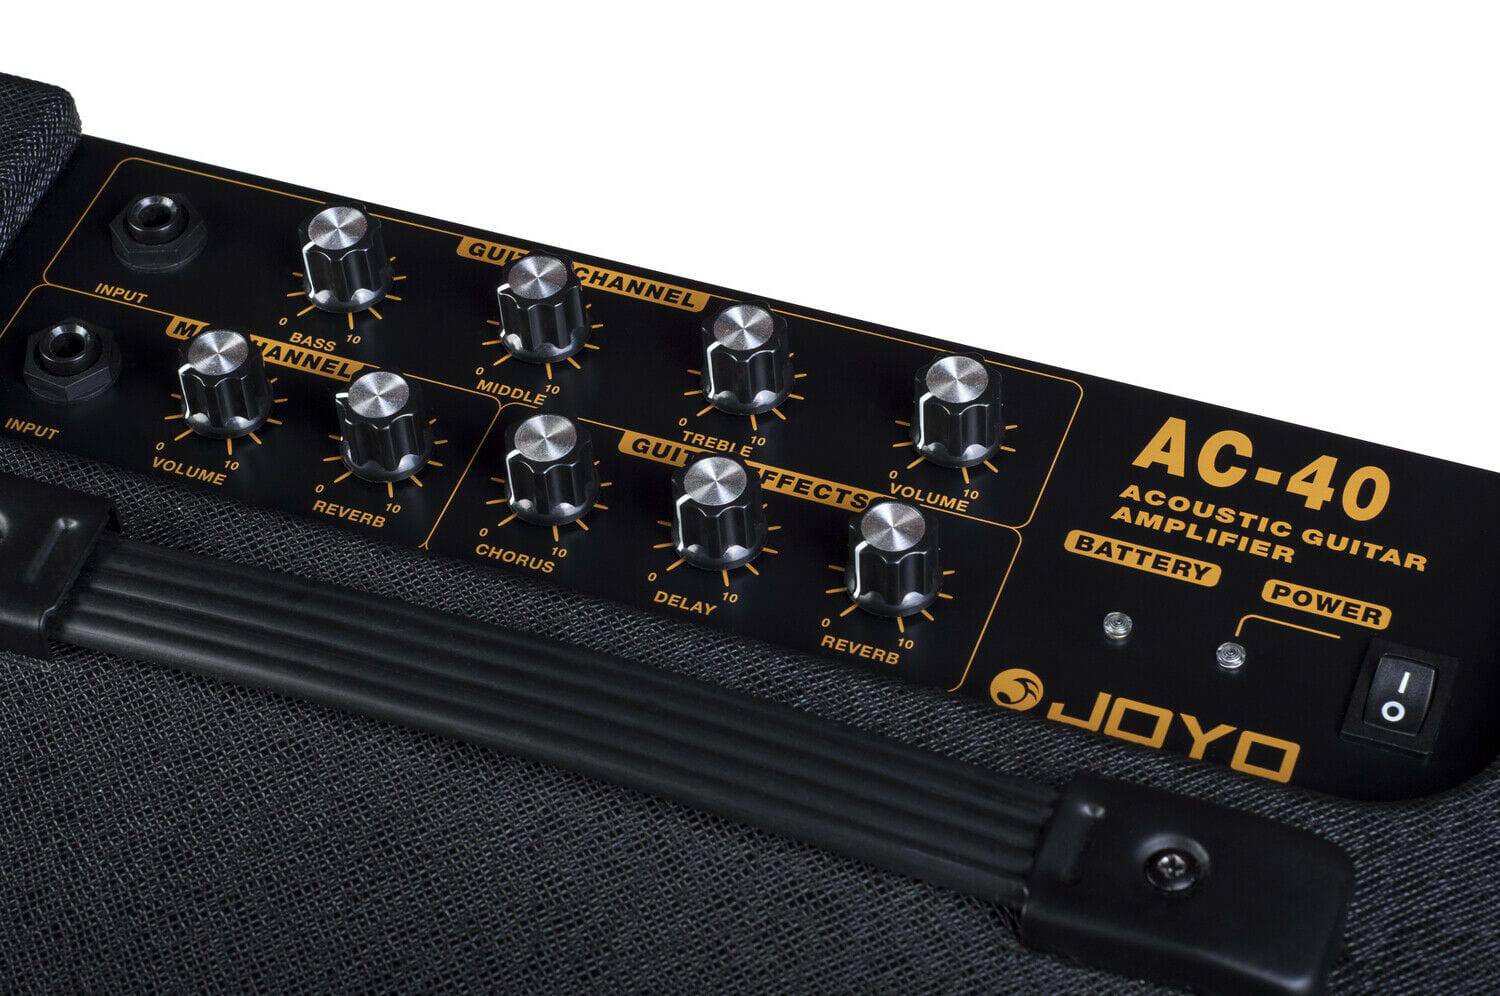 Joyo AC-40 40Watts Acoustic Guitar Amplifier